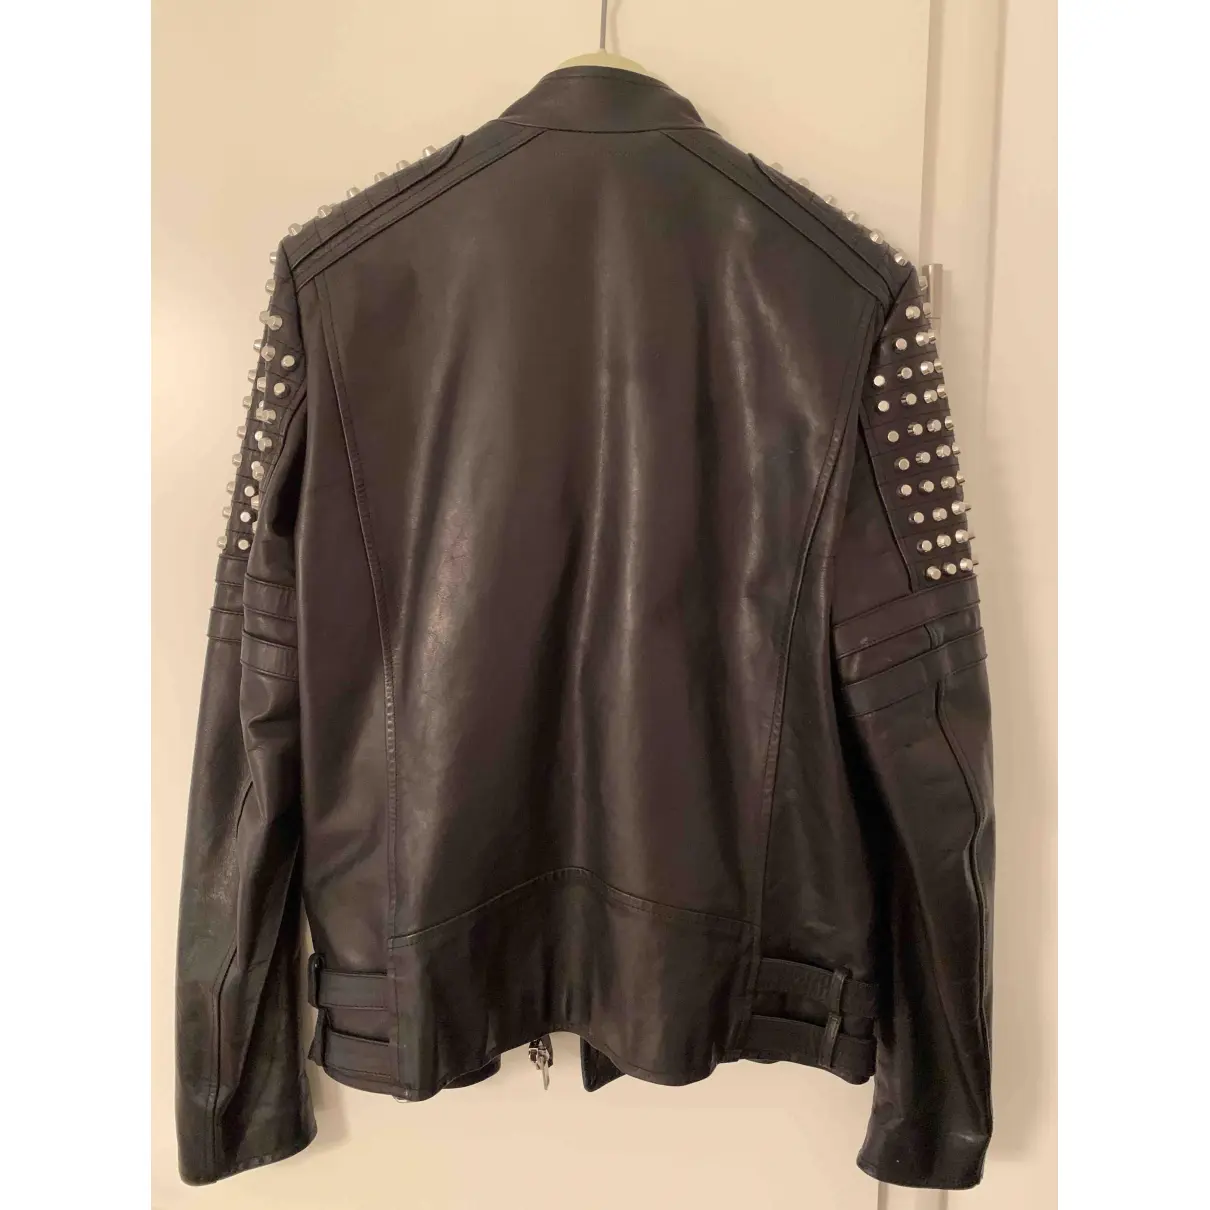 Buy Diesel Black Gold Leather jacket online